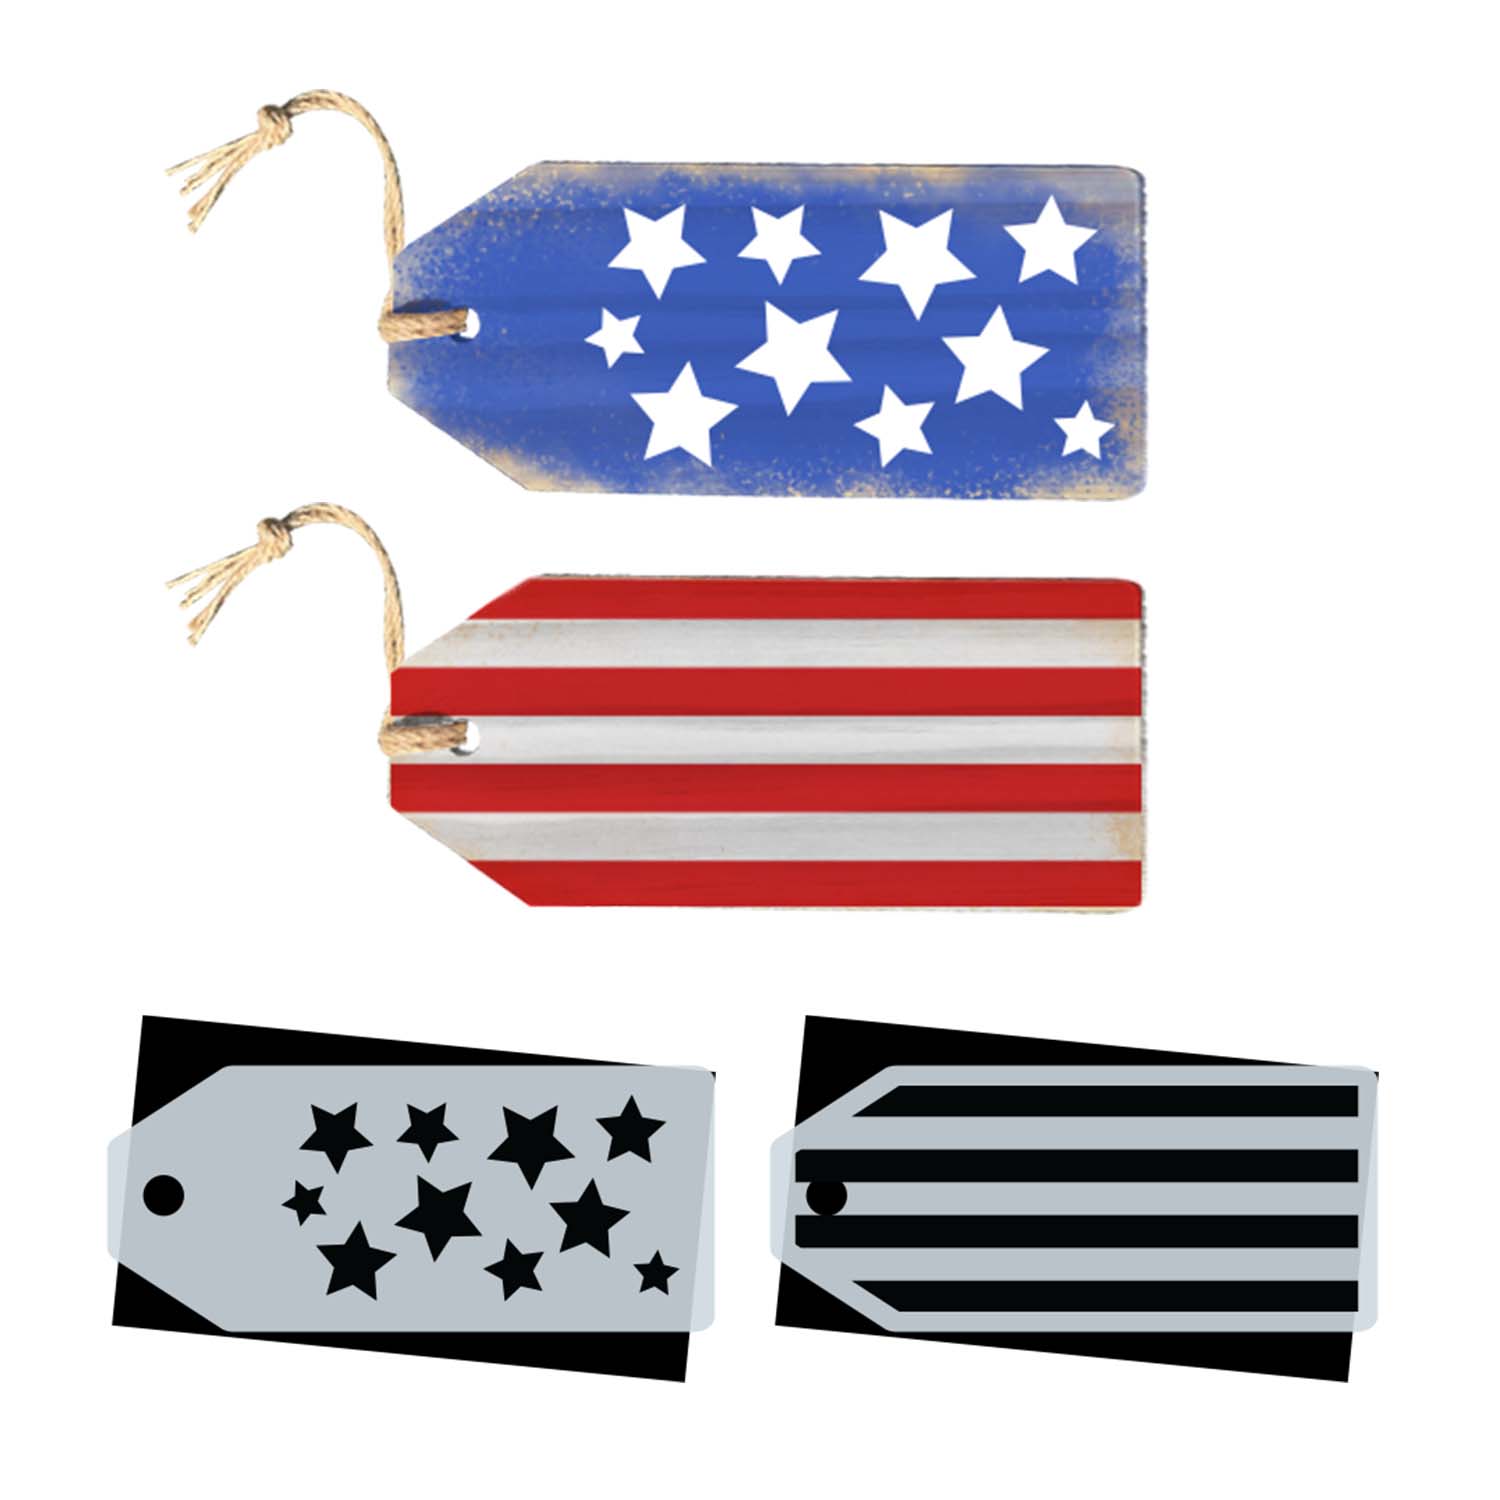 DIY patriotic stars and stripes door tags, reusable stars and stripes door tag stencil